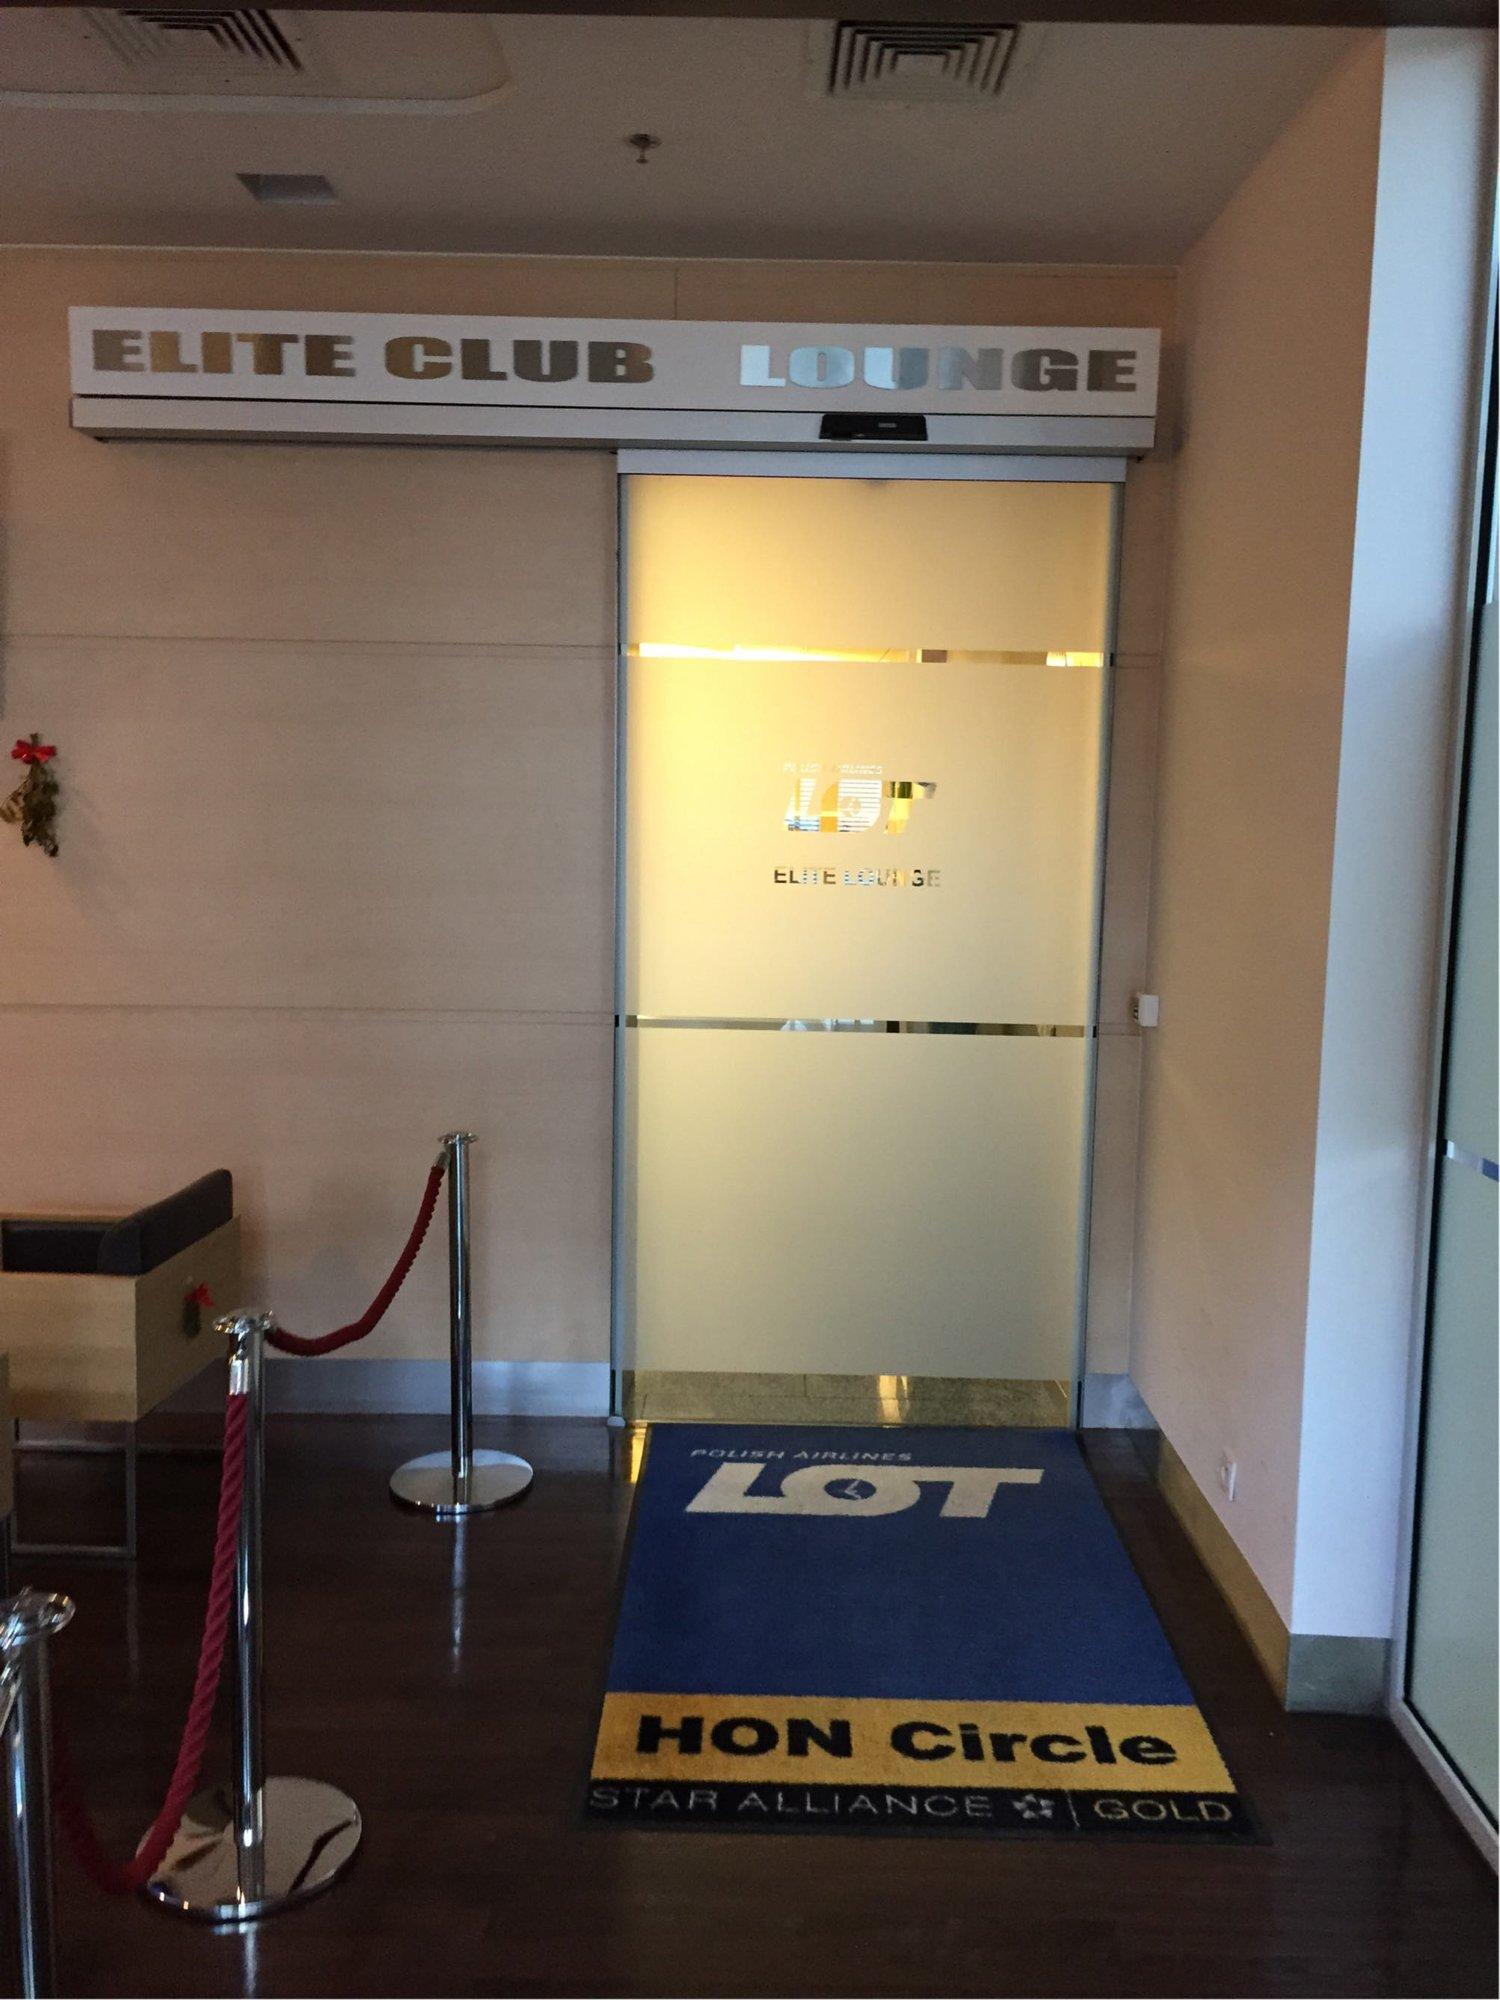 LOT Elite Club Lounge image 1 of 6